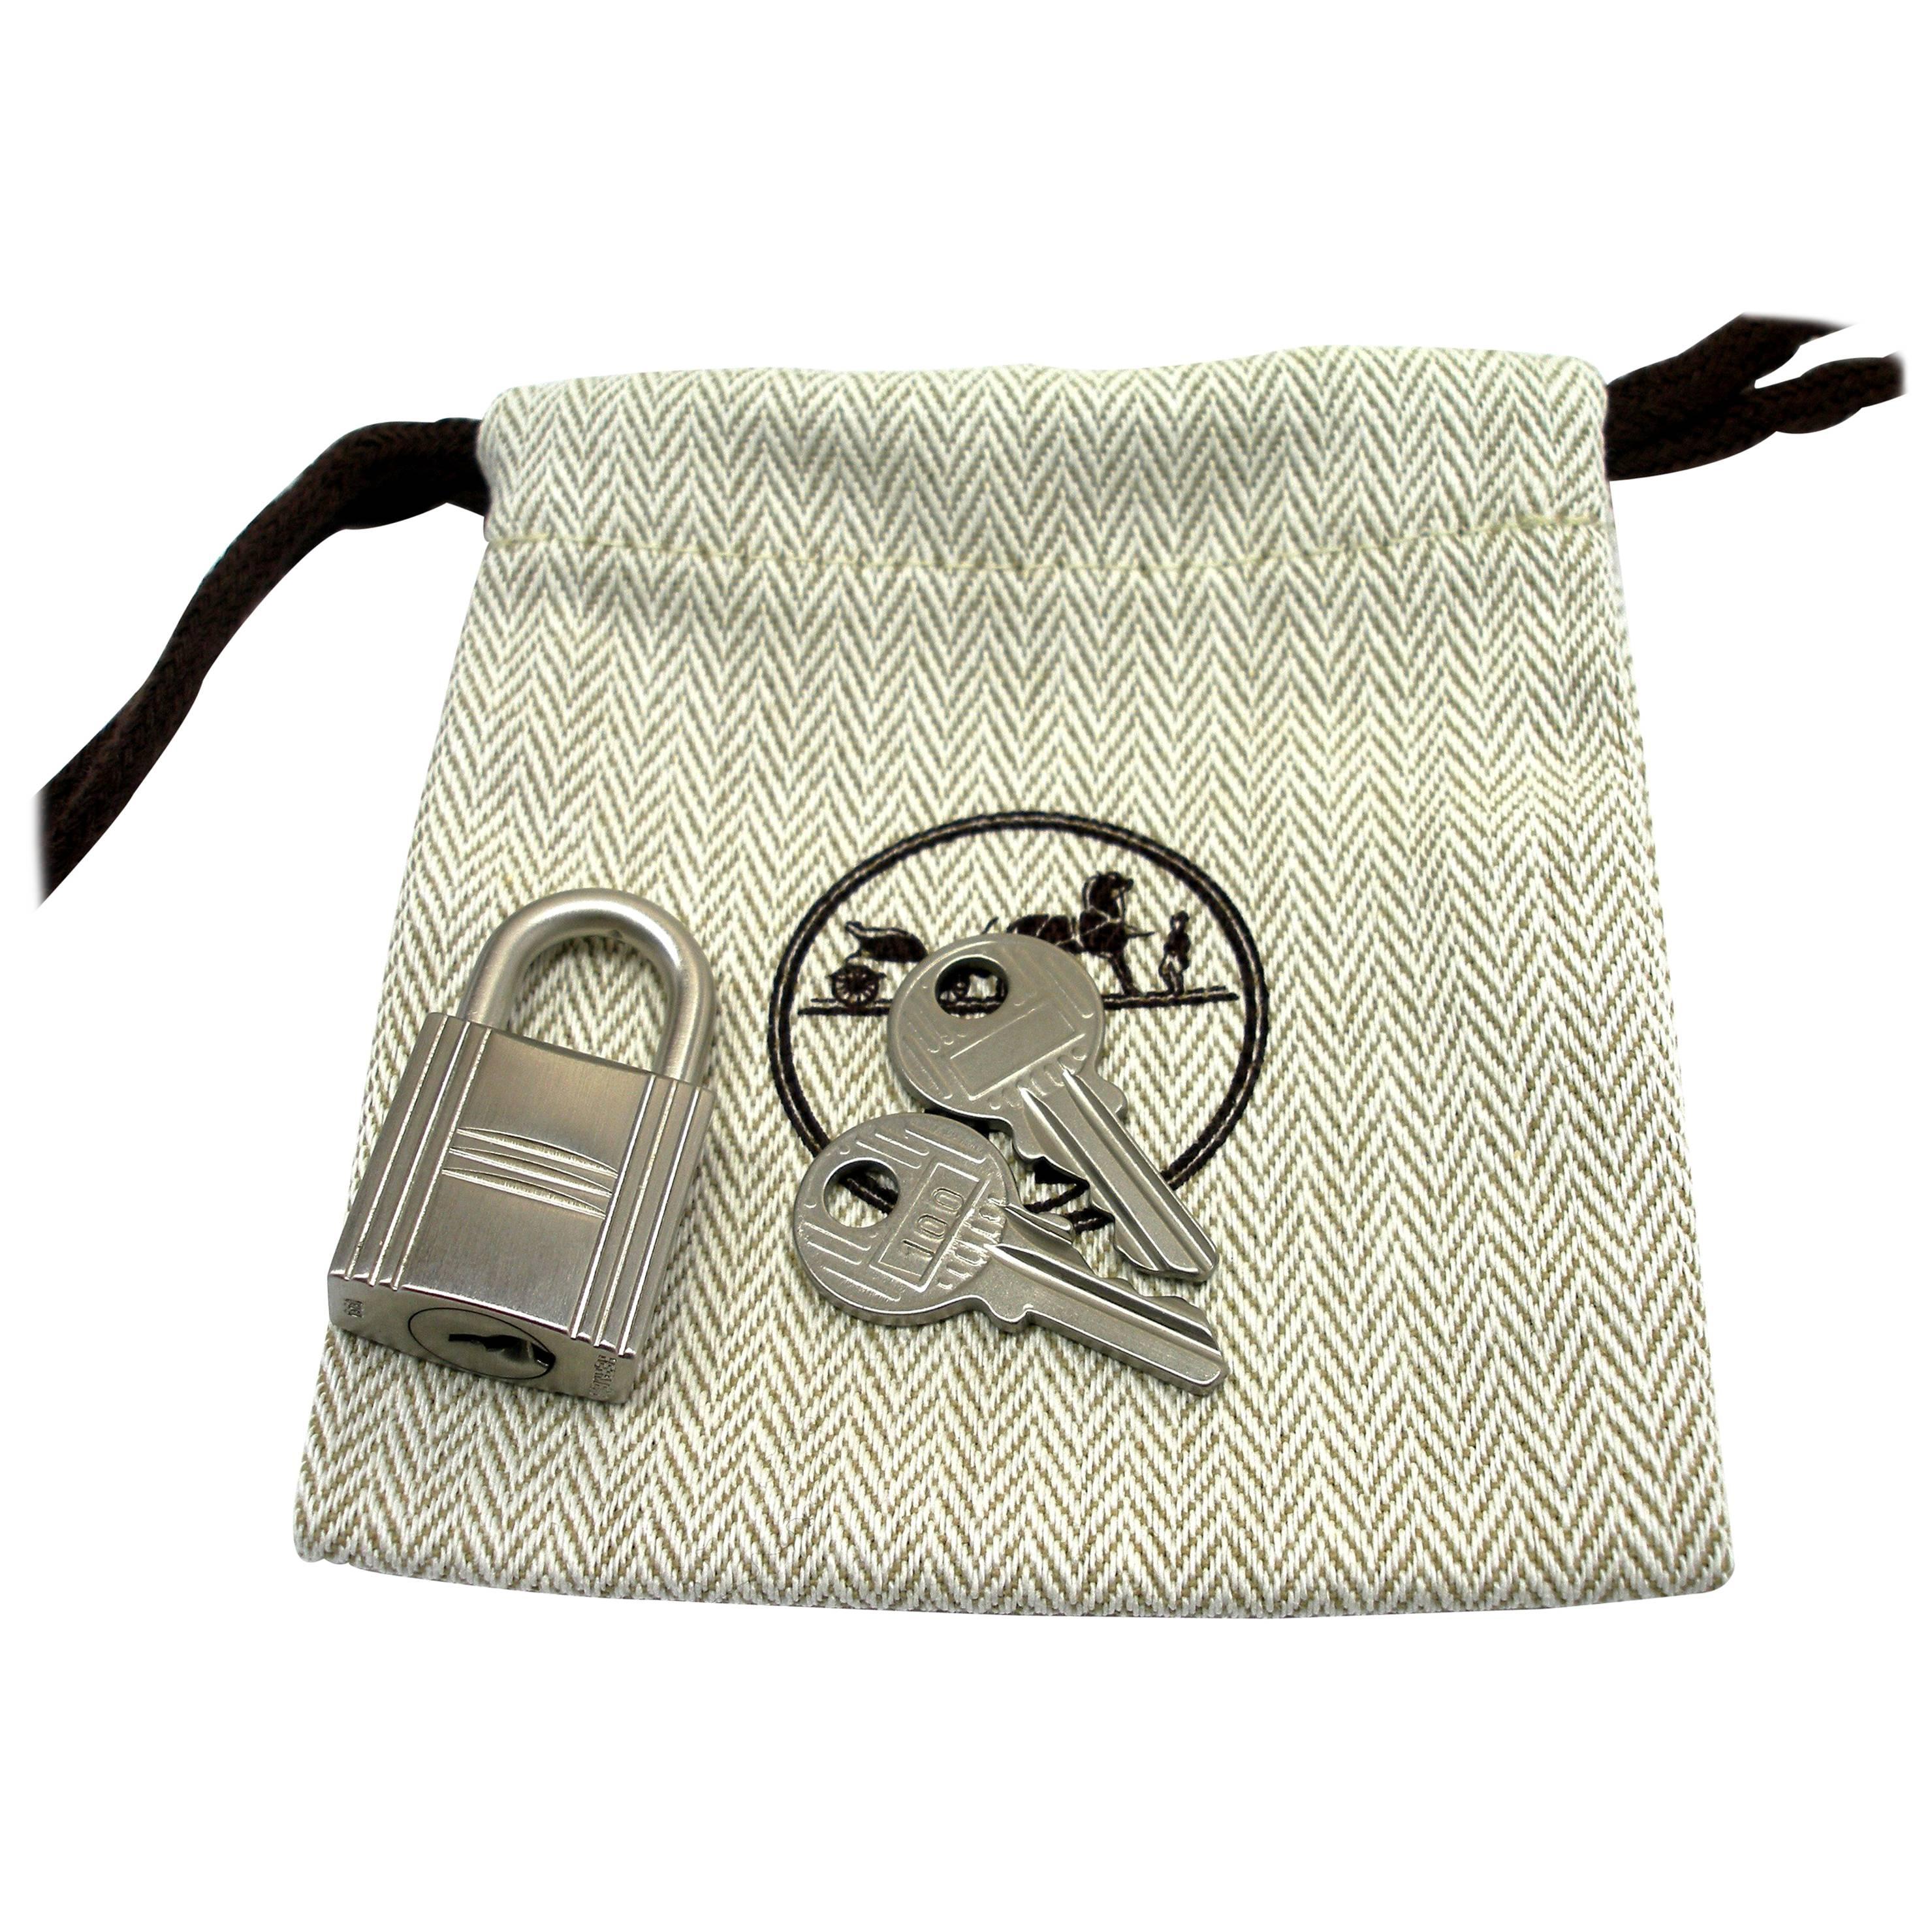  Hermès Cadenas  Lock & 2 Keys For Birkin or Kelly bag  / BRAND NEW